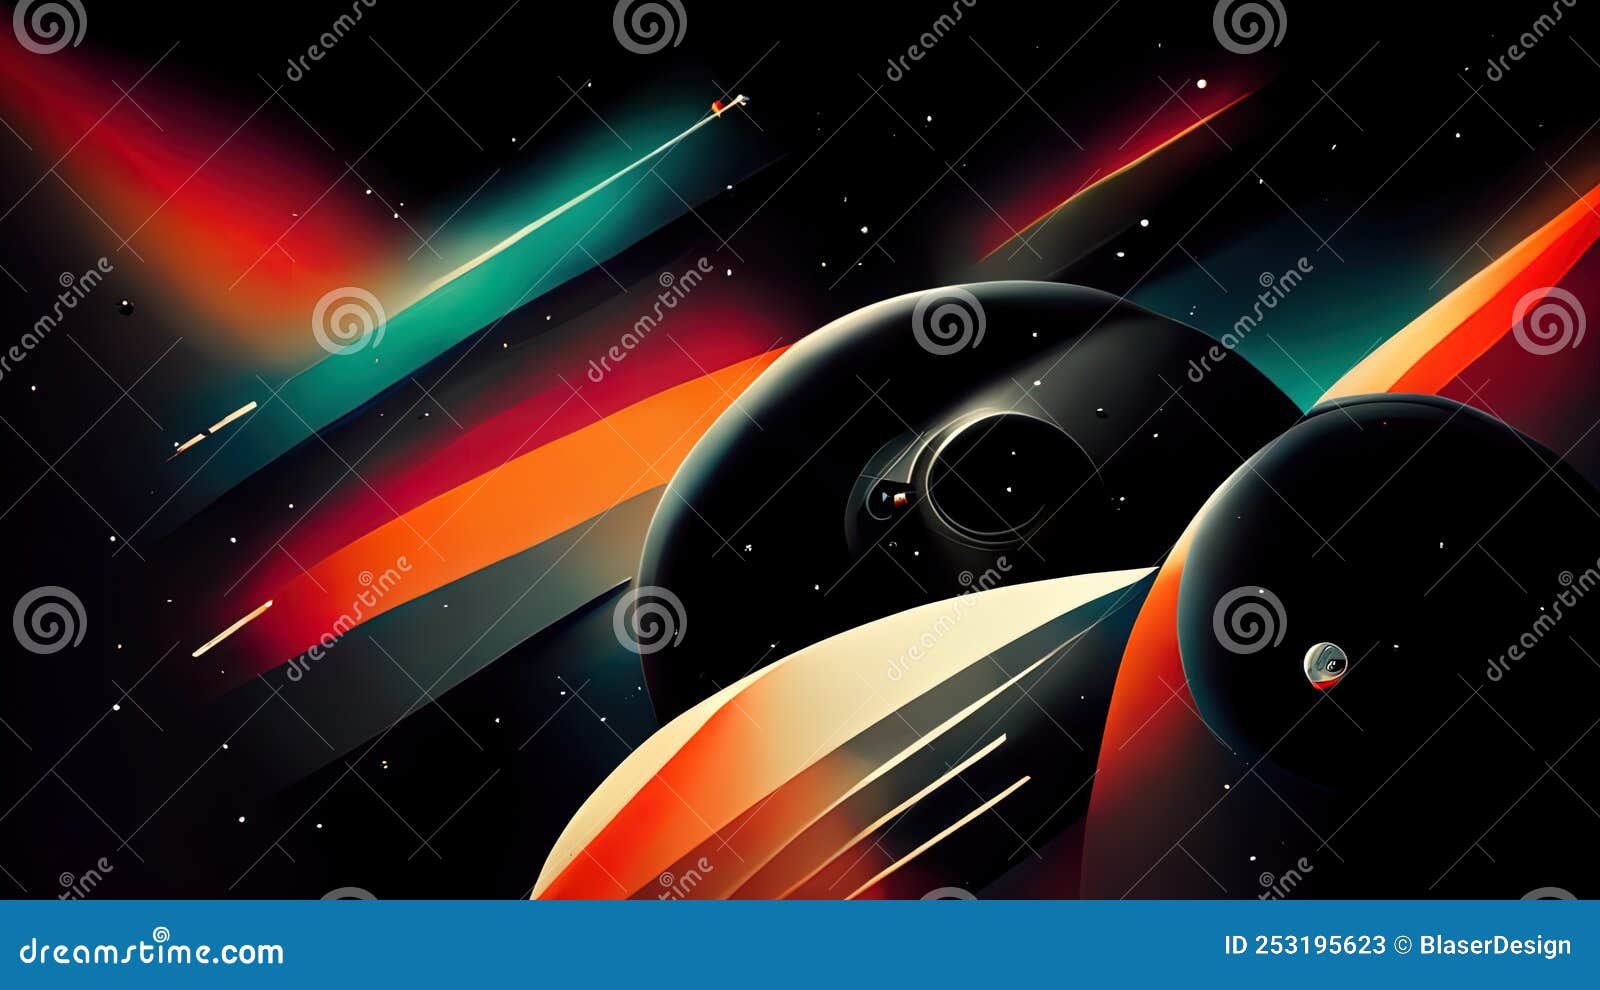 Retro Space Background Images  Free Download on Freepik